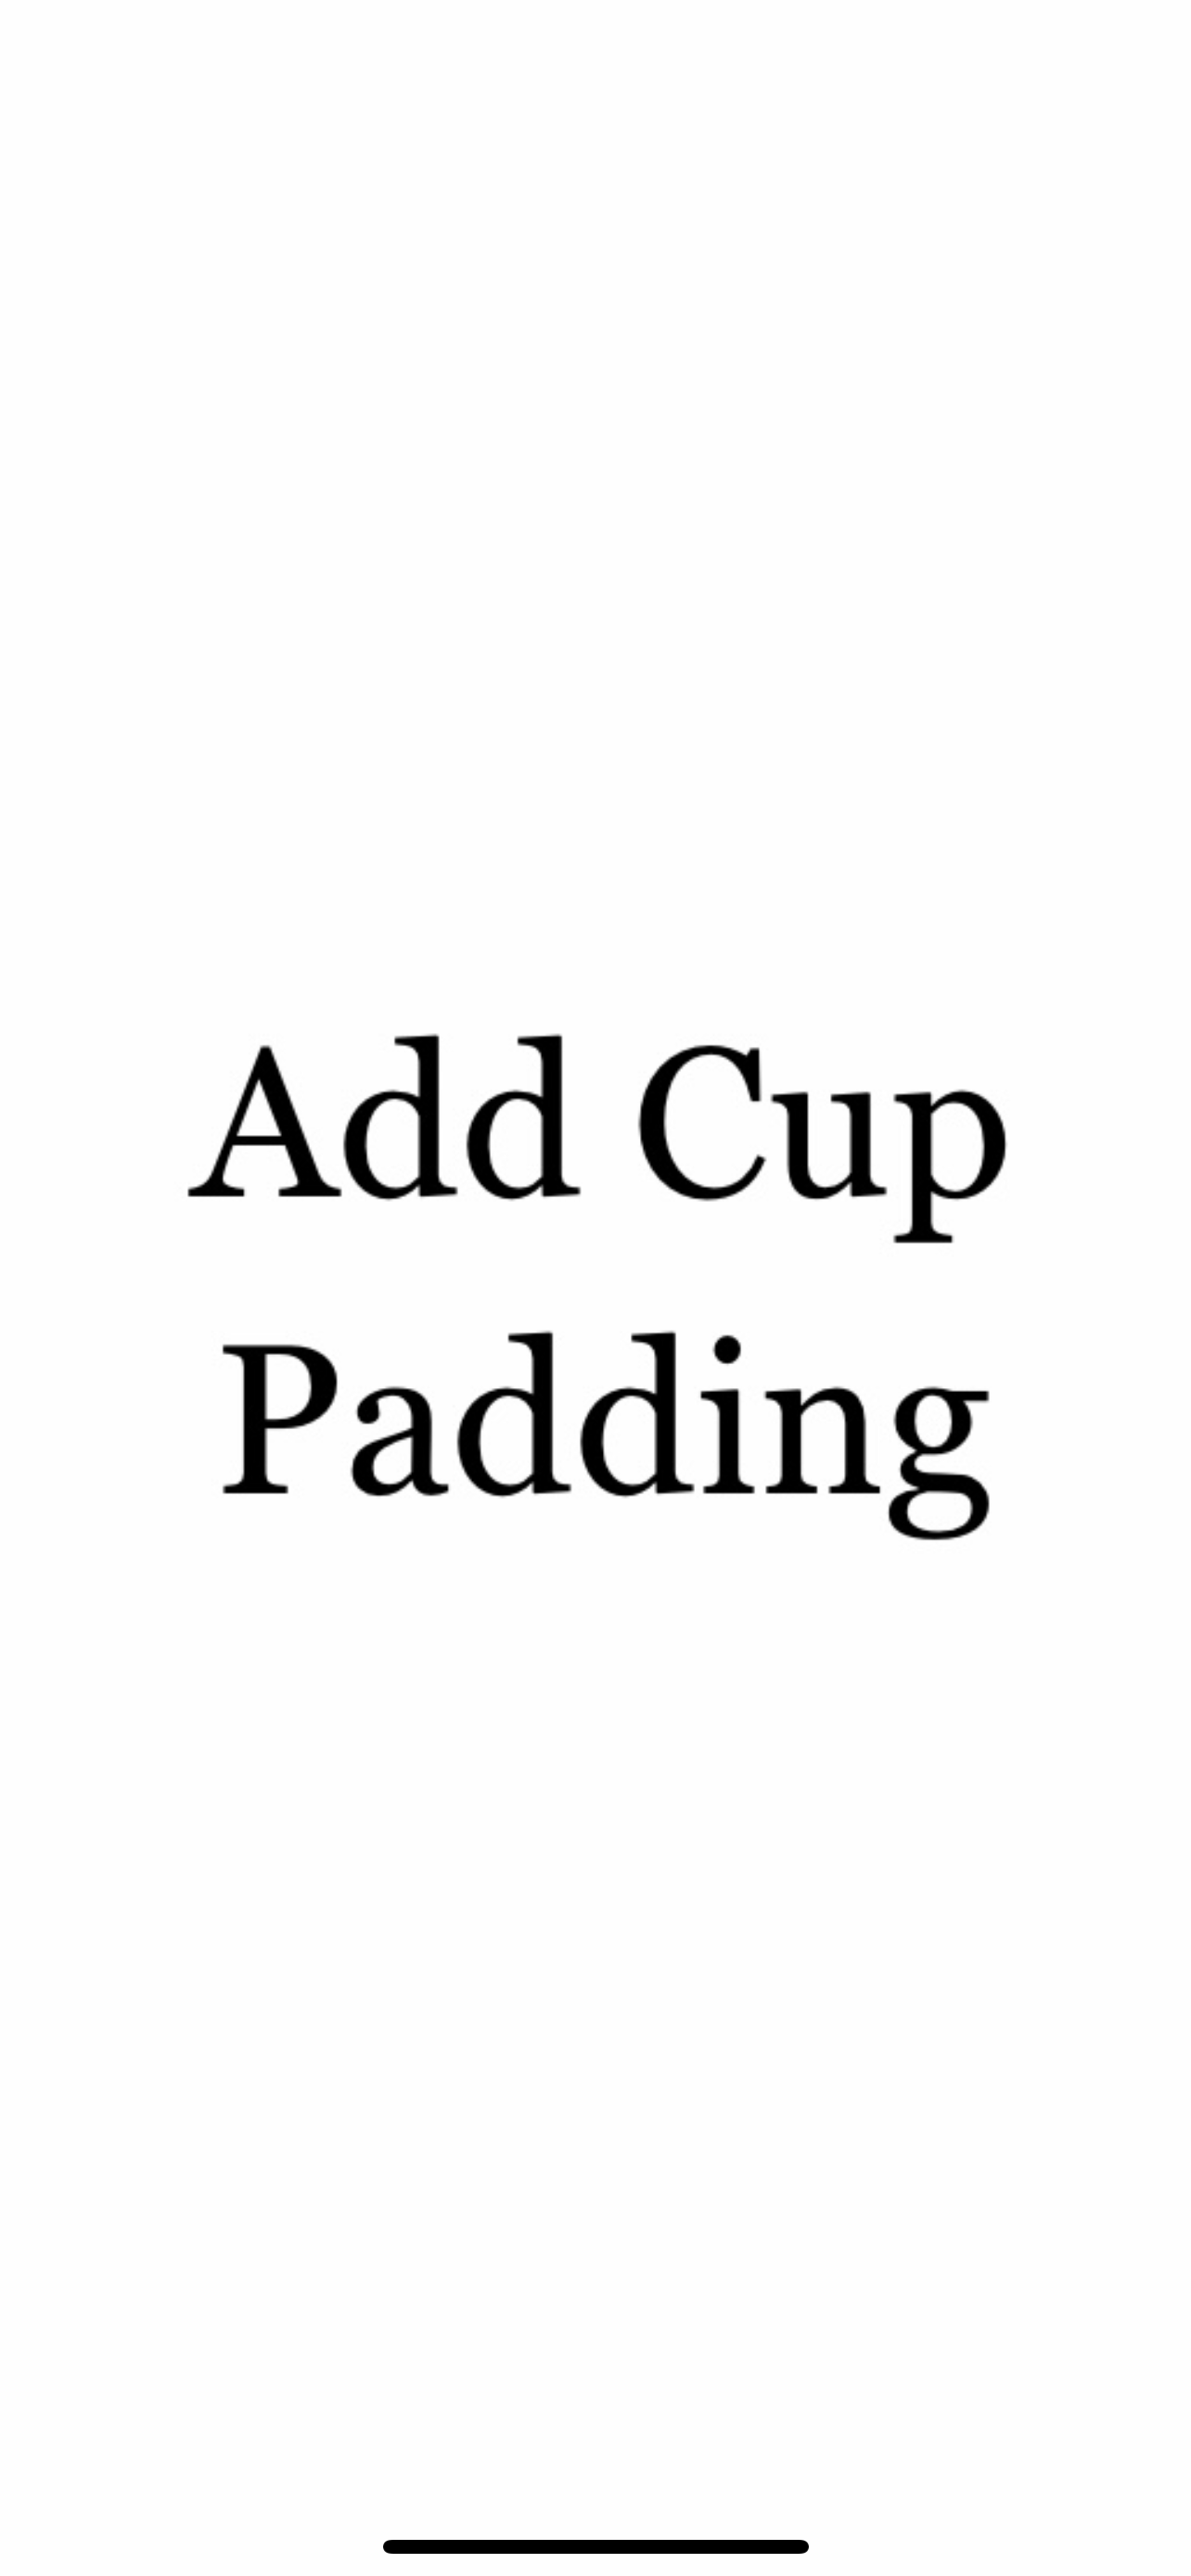 Cup Padding